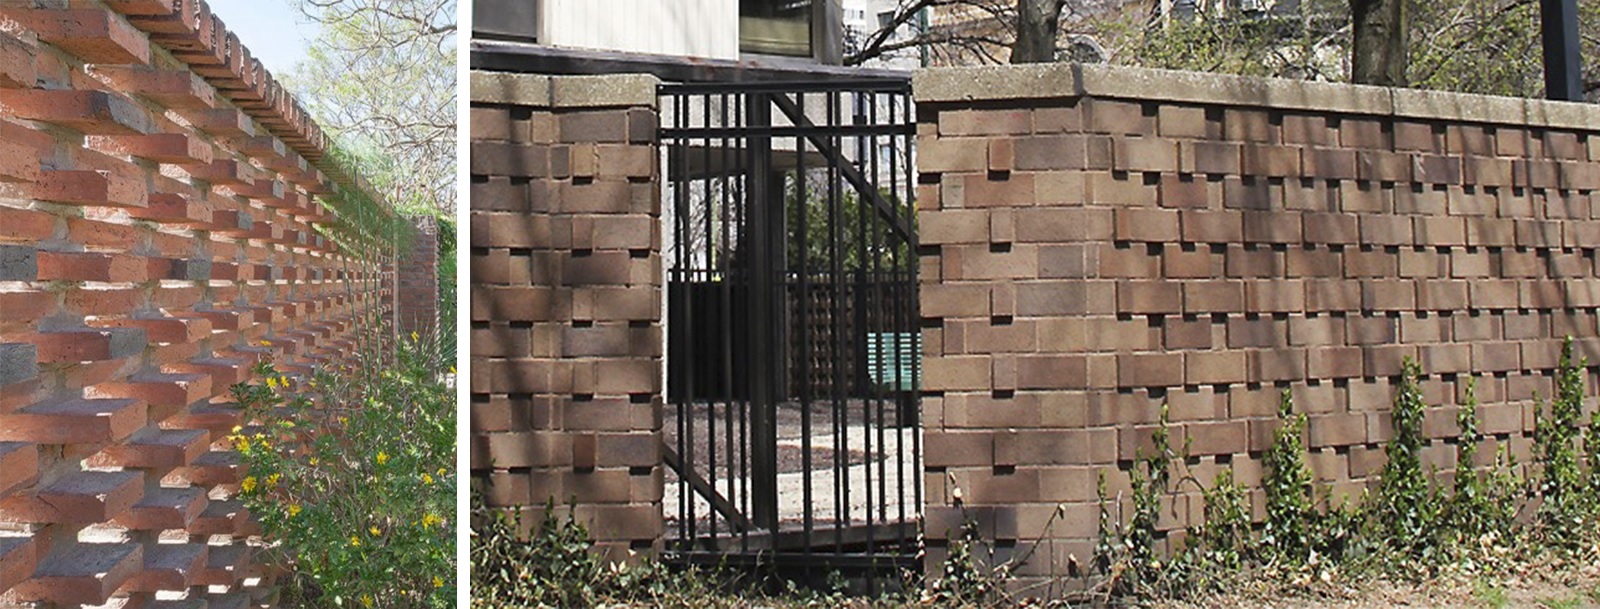 Ornamentation in fences